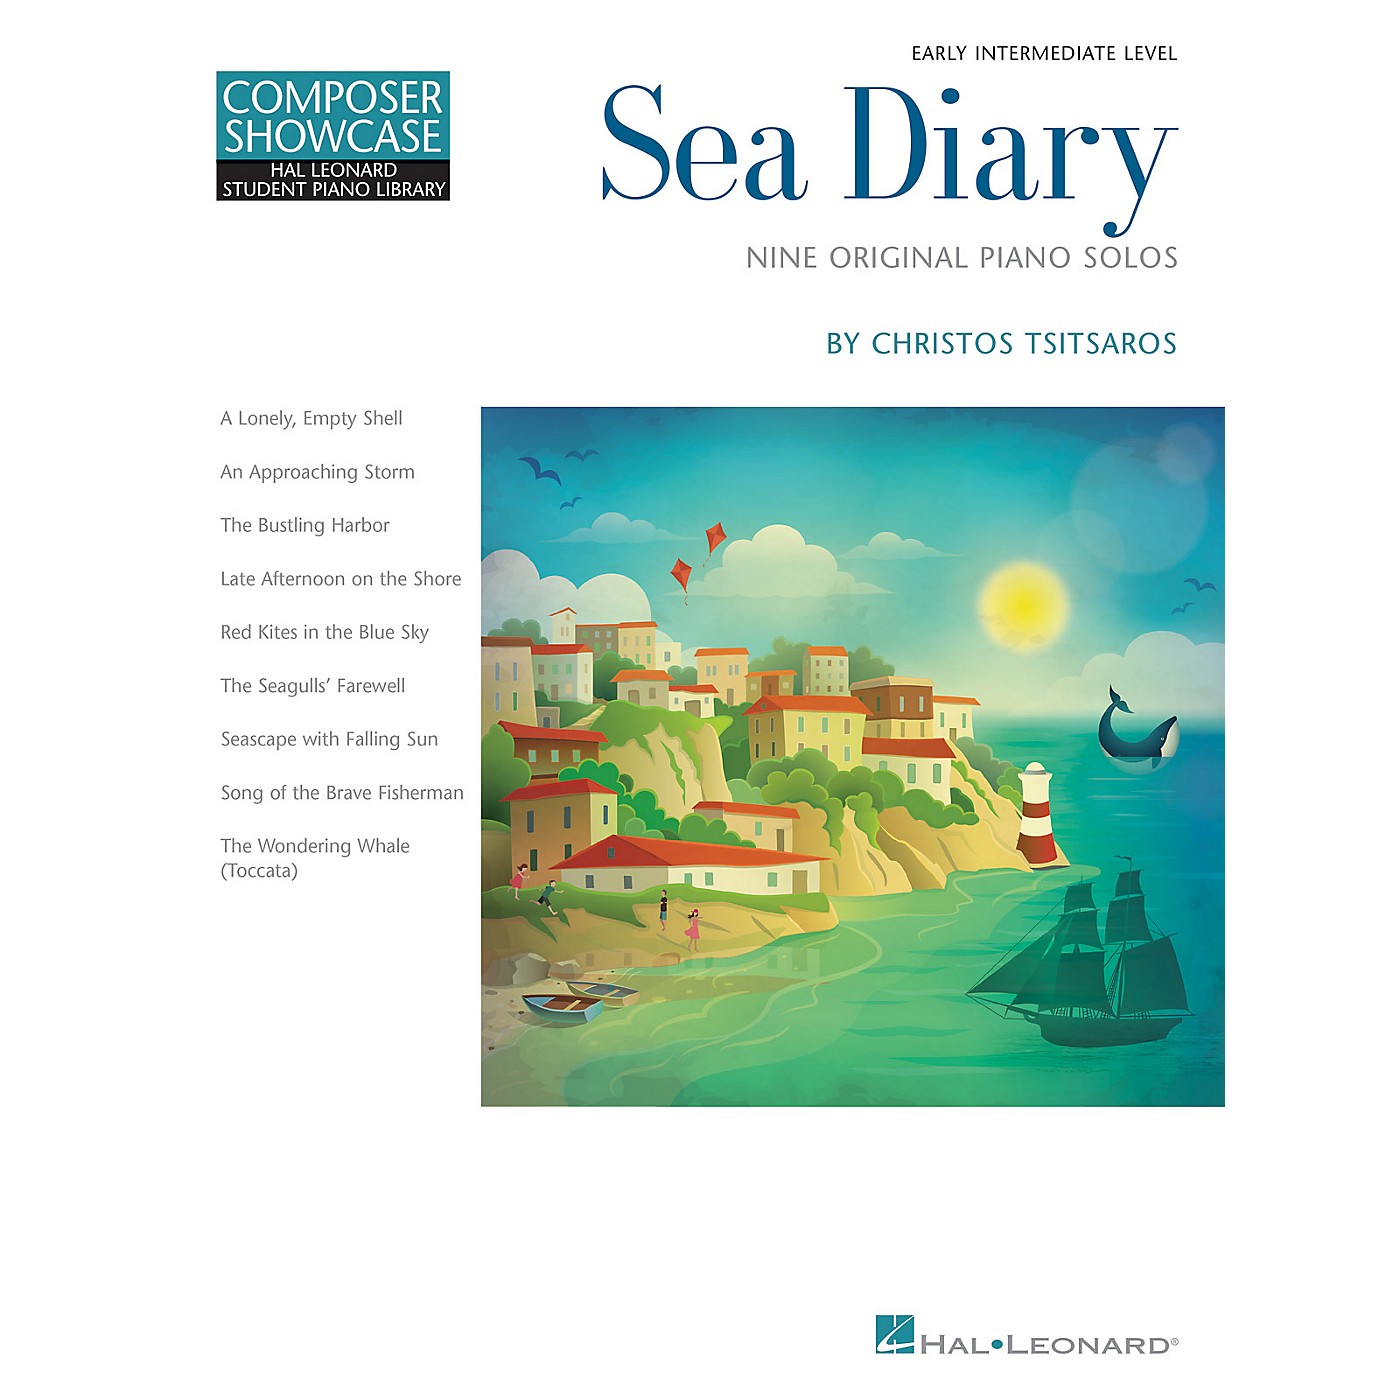 Hal Leonard Sea Diary - Nine Original Piano Solos Hal Leonard Student Piano Library Early Intermediate Composer Showcase thumbnail